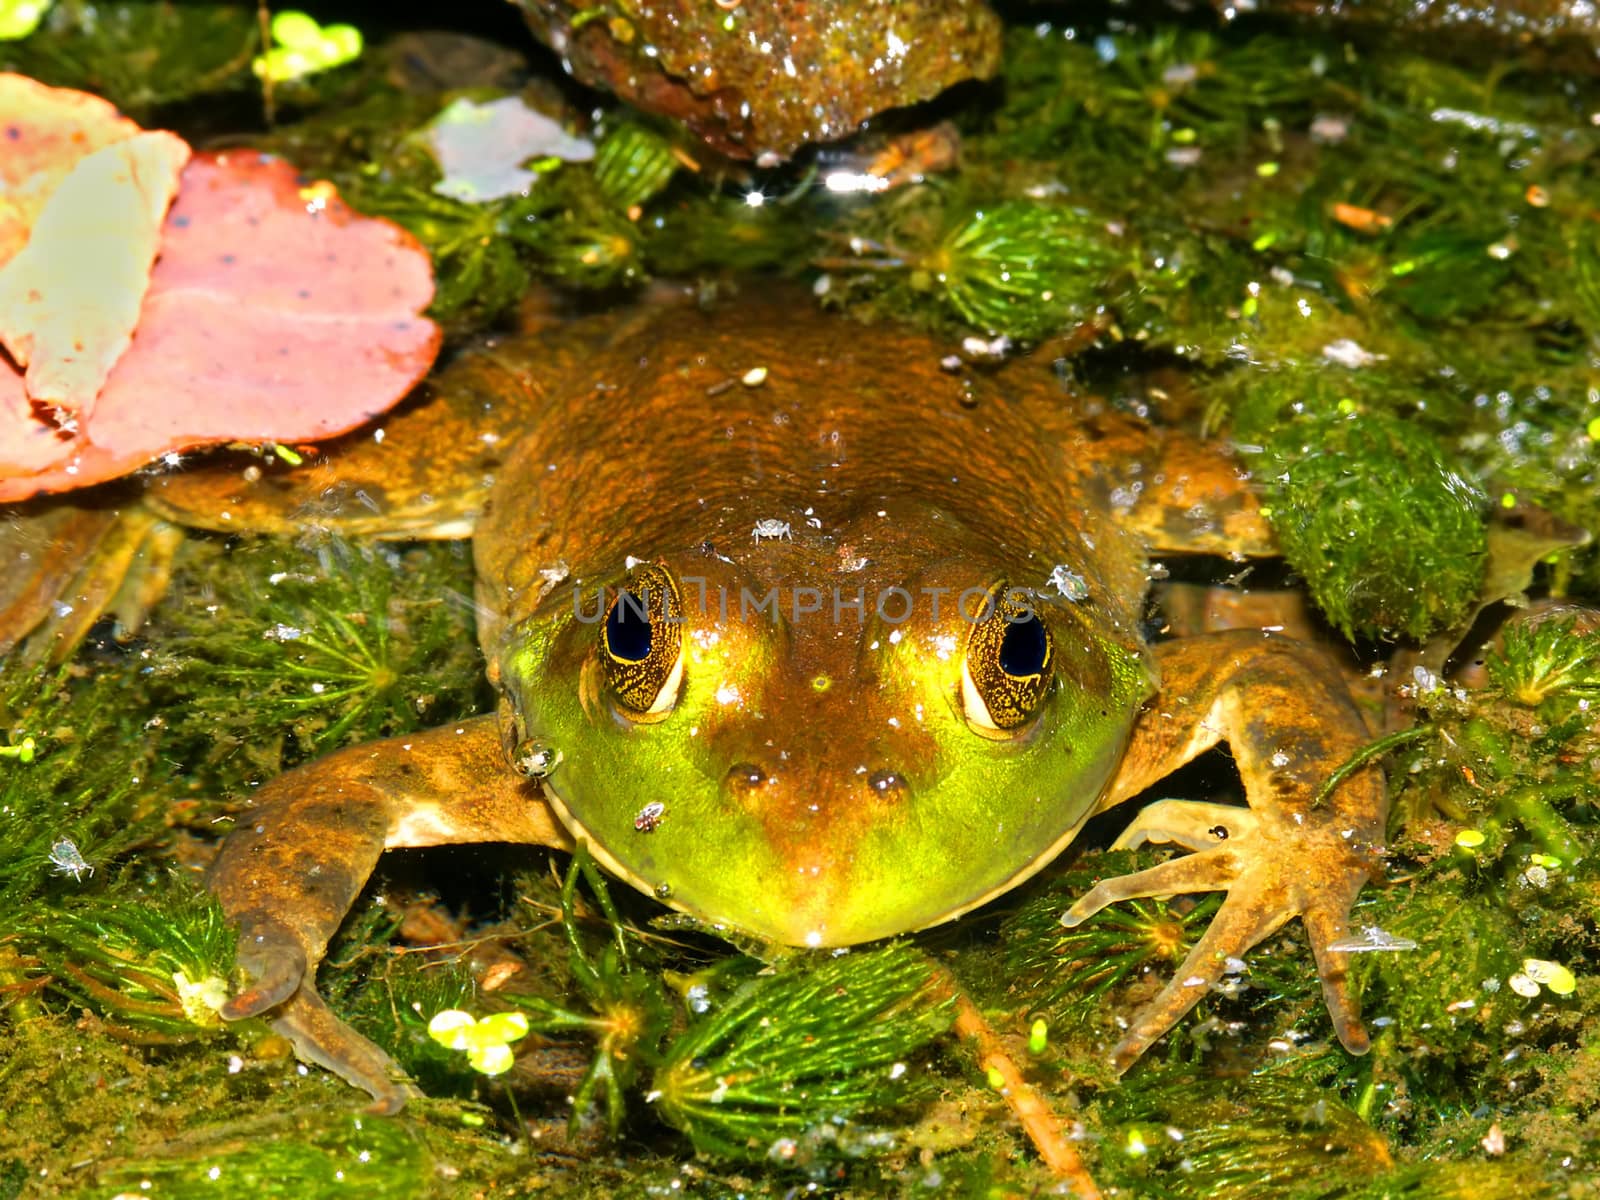 Bullfrog (Rana catesbeiana) Wisconsin by Wirepec